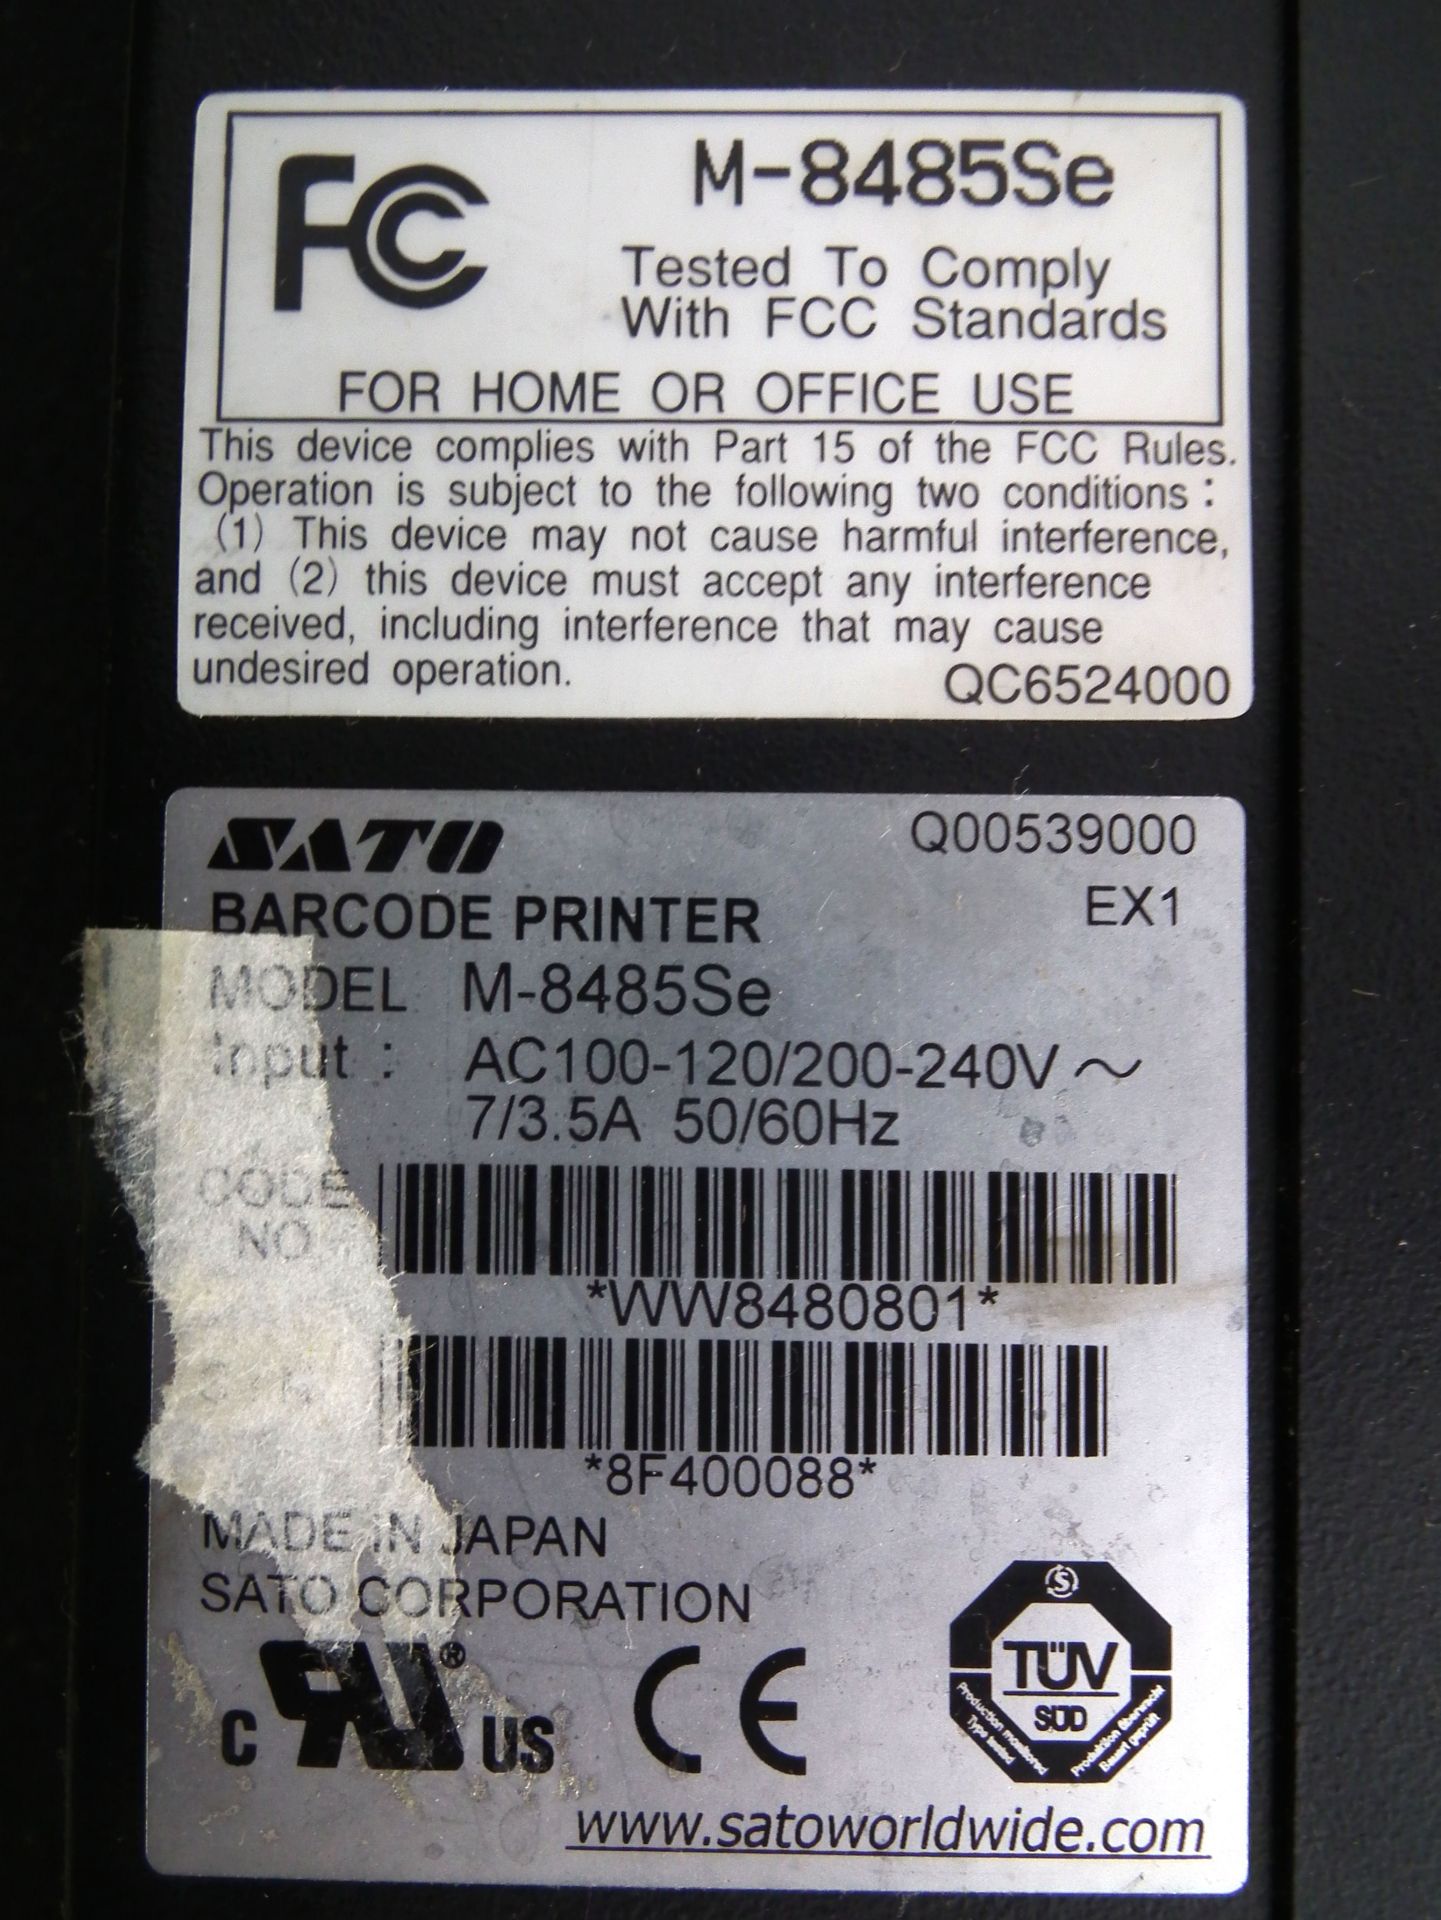 Paragon PLS300 Pressure Sensitive Labeler with Sato Printer B5676 - Image 19 of 19